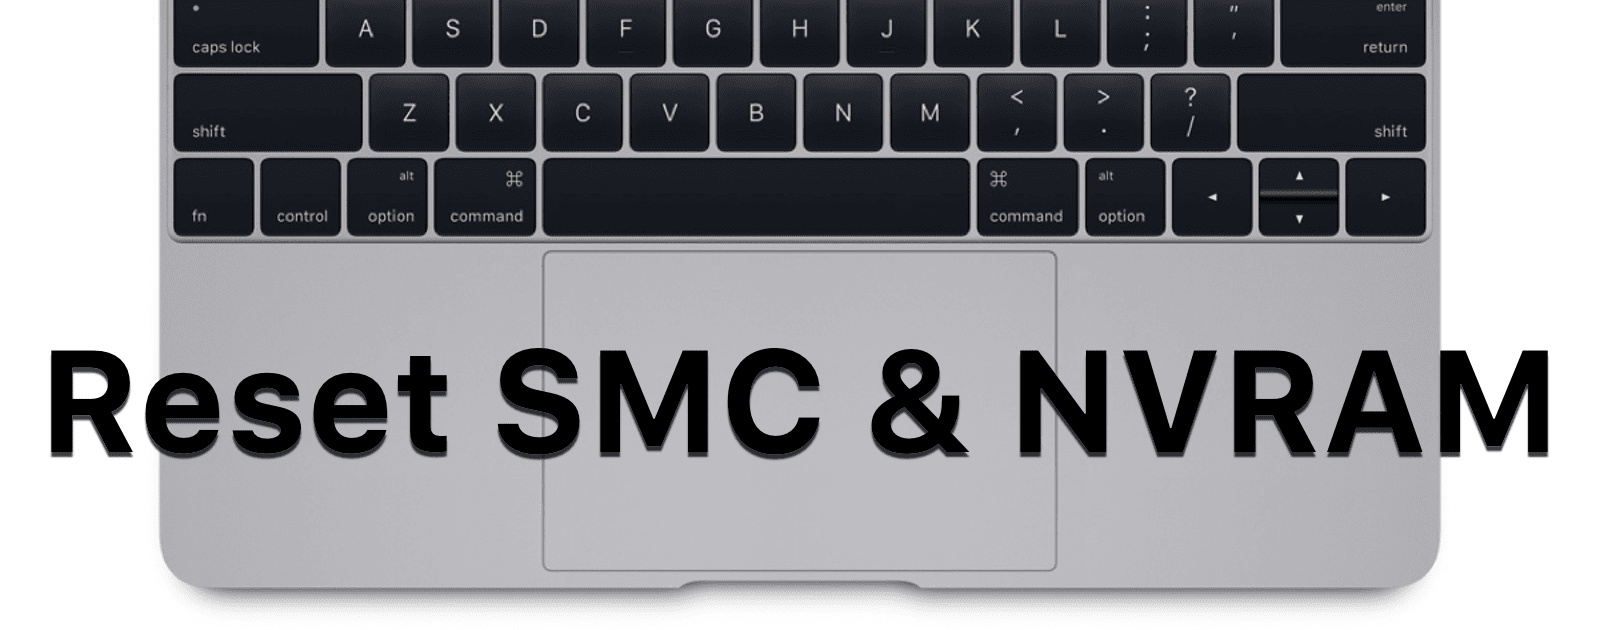 2015 macbook pro reset smc